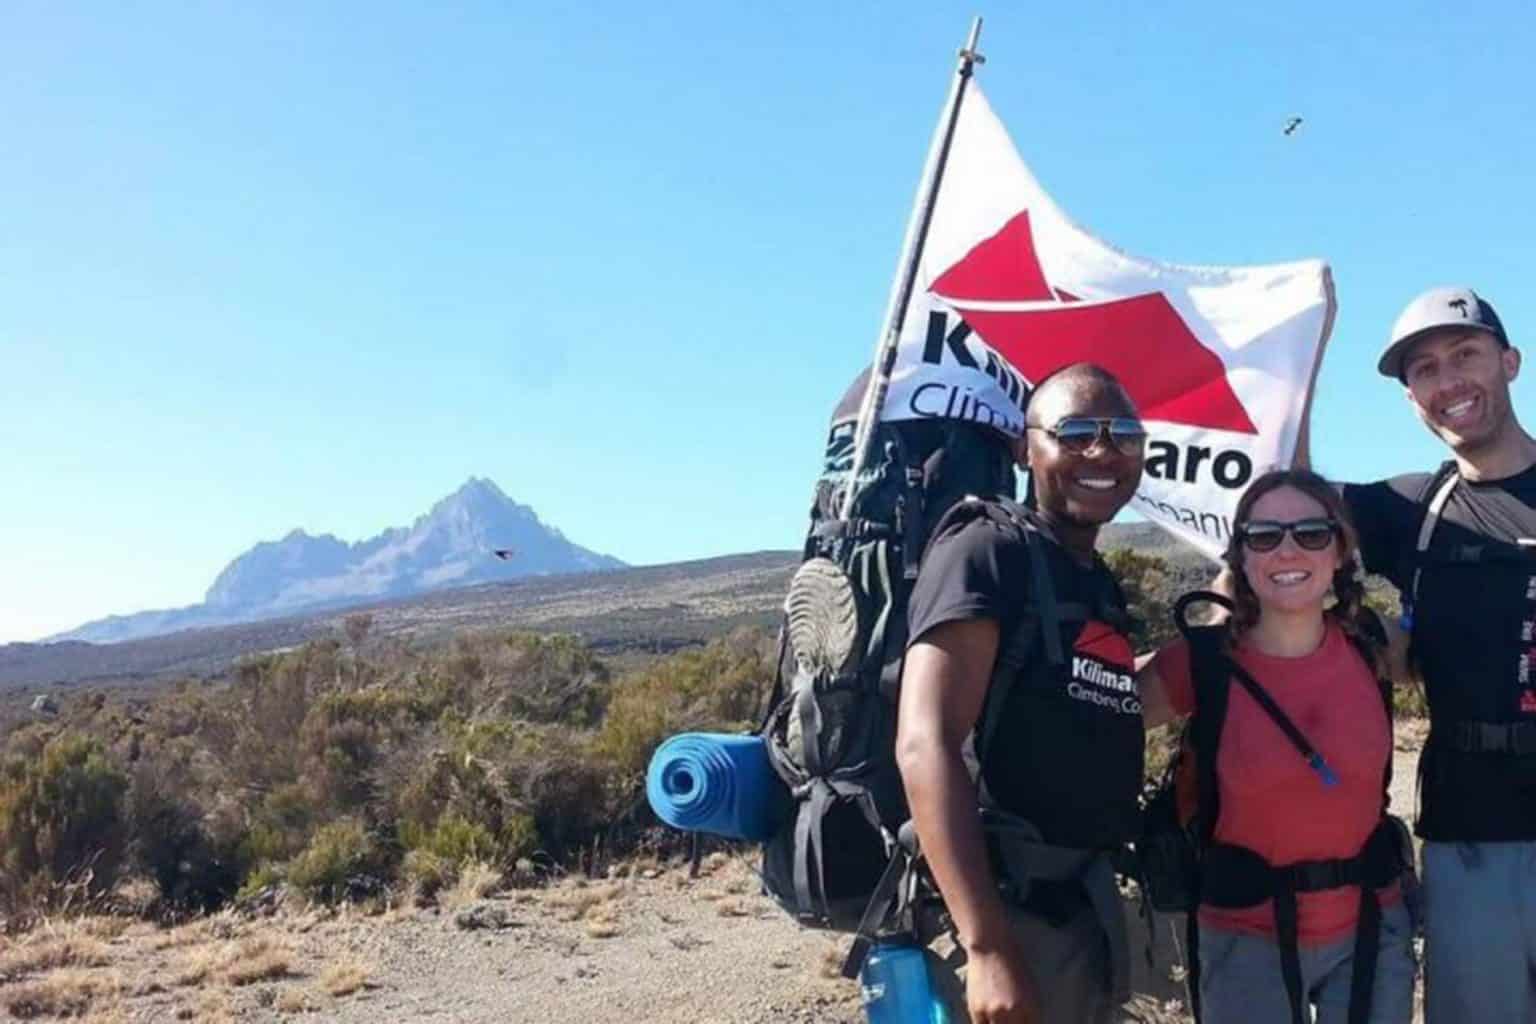 branded flags for Kilimanjaro Climbing Company